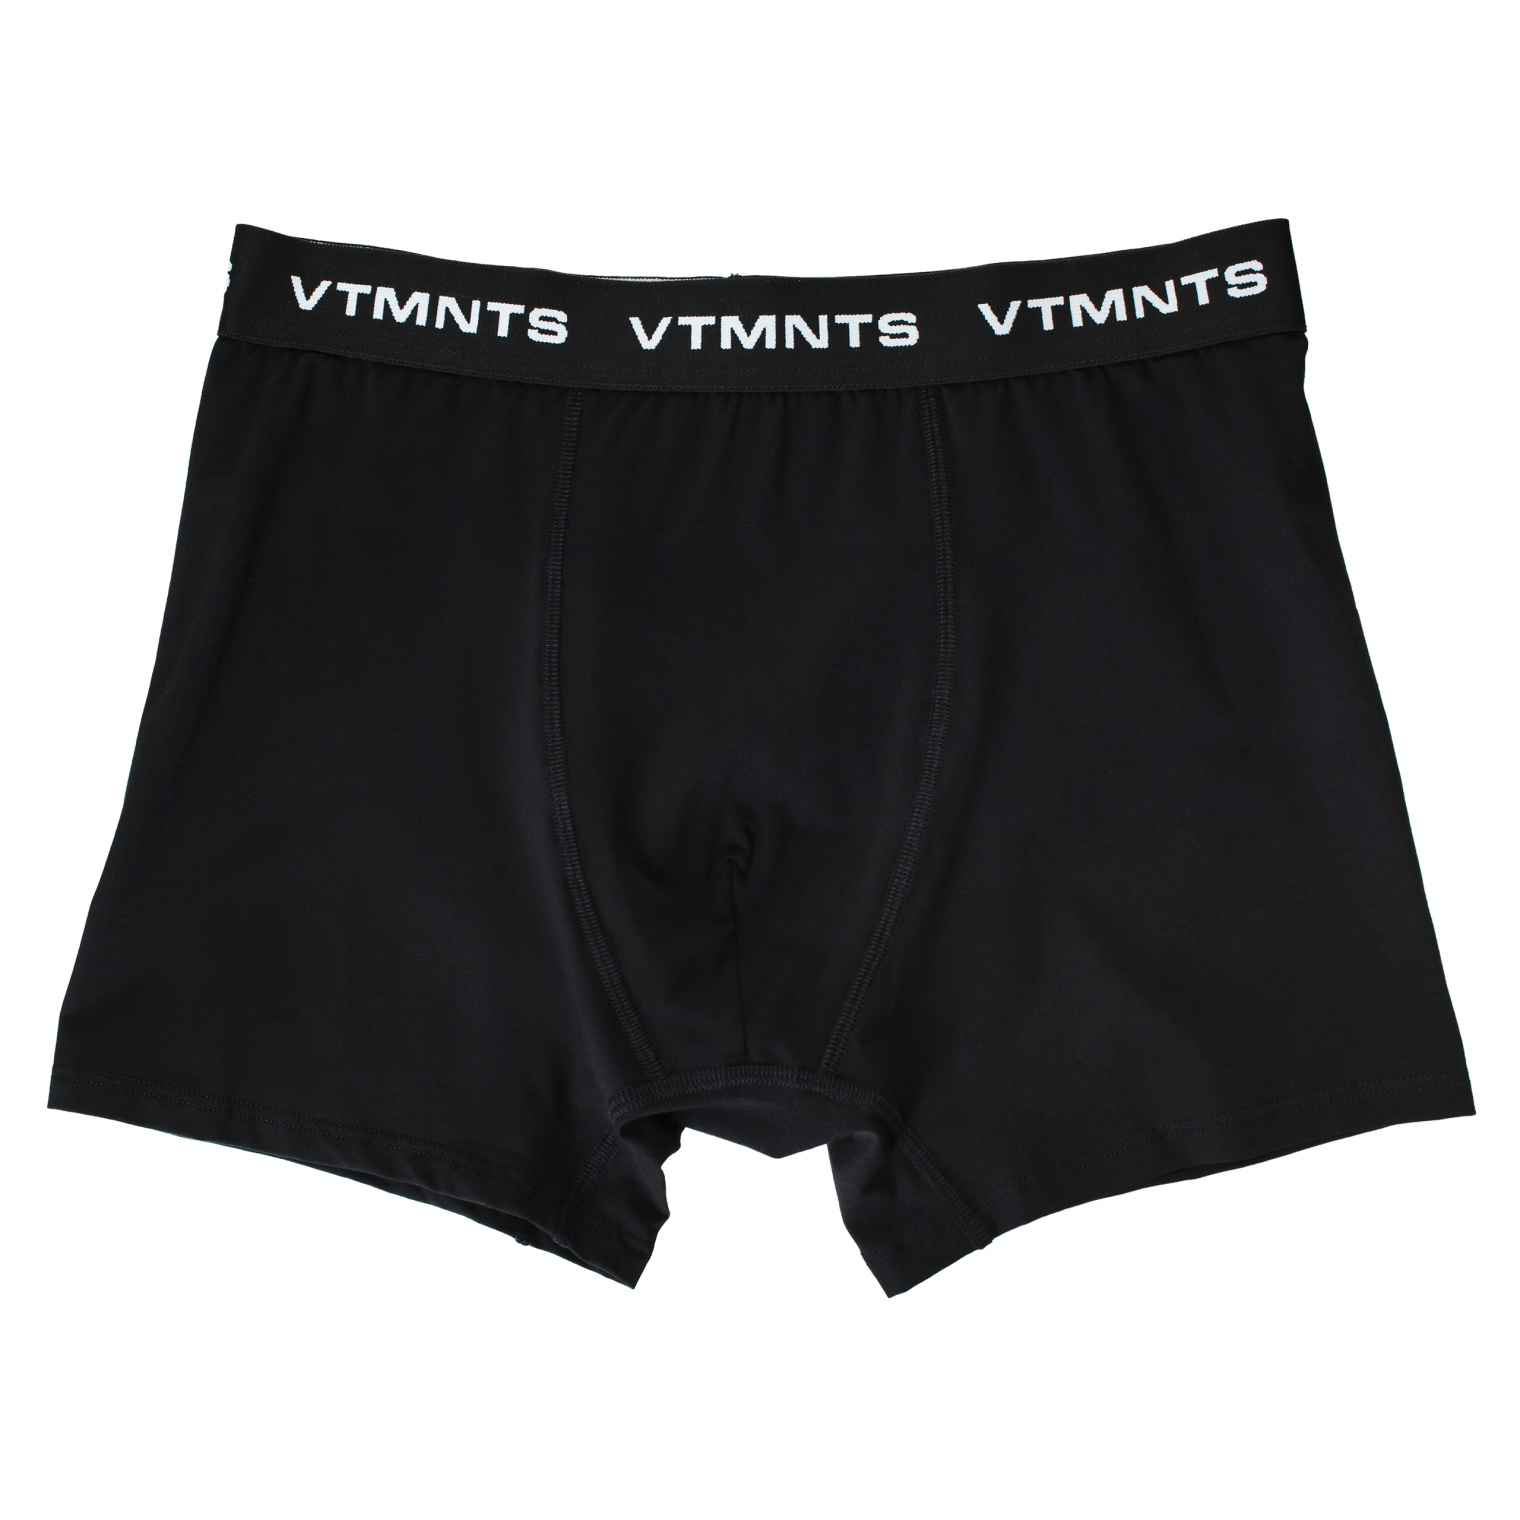 VTMNTS Black boxer briefs